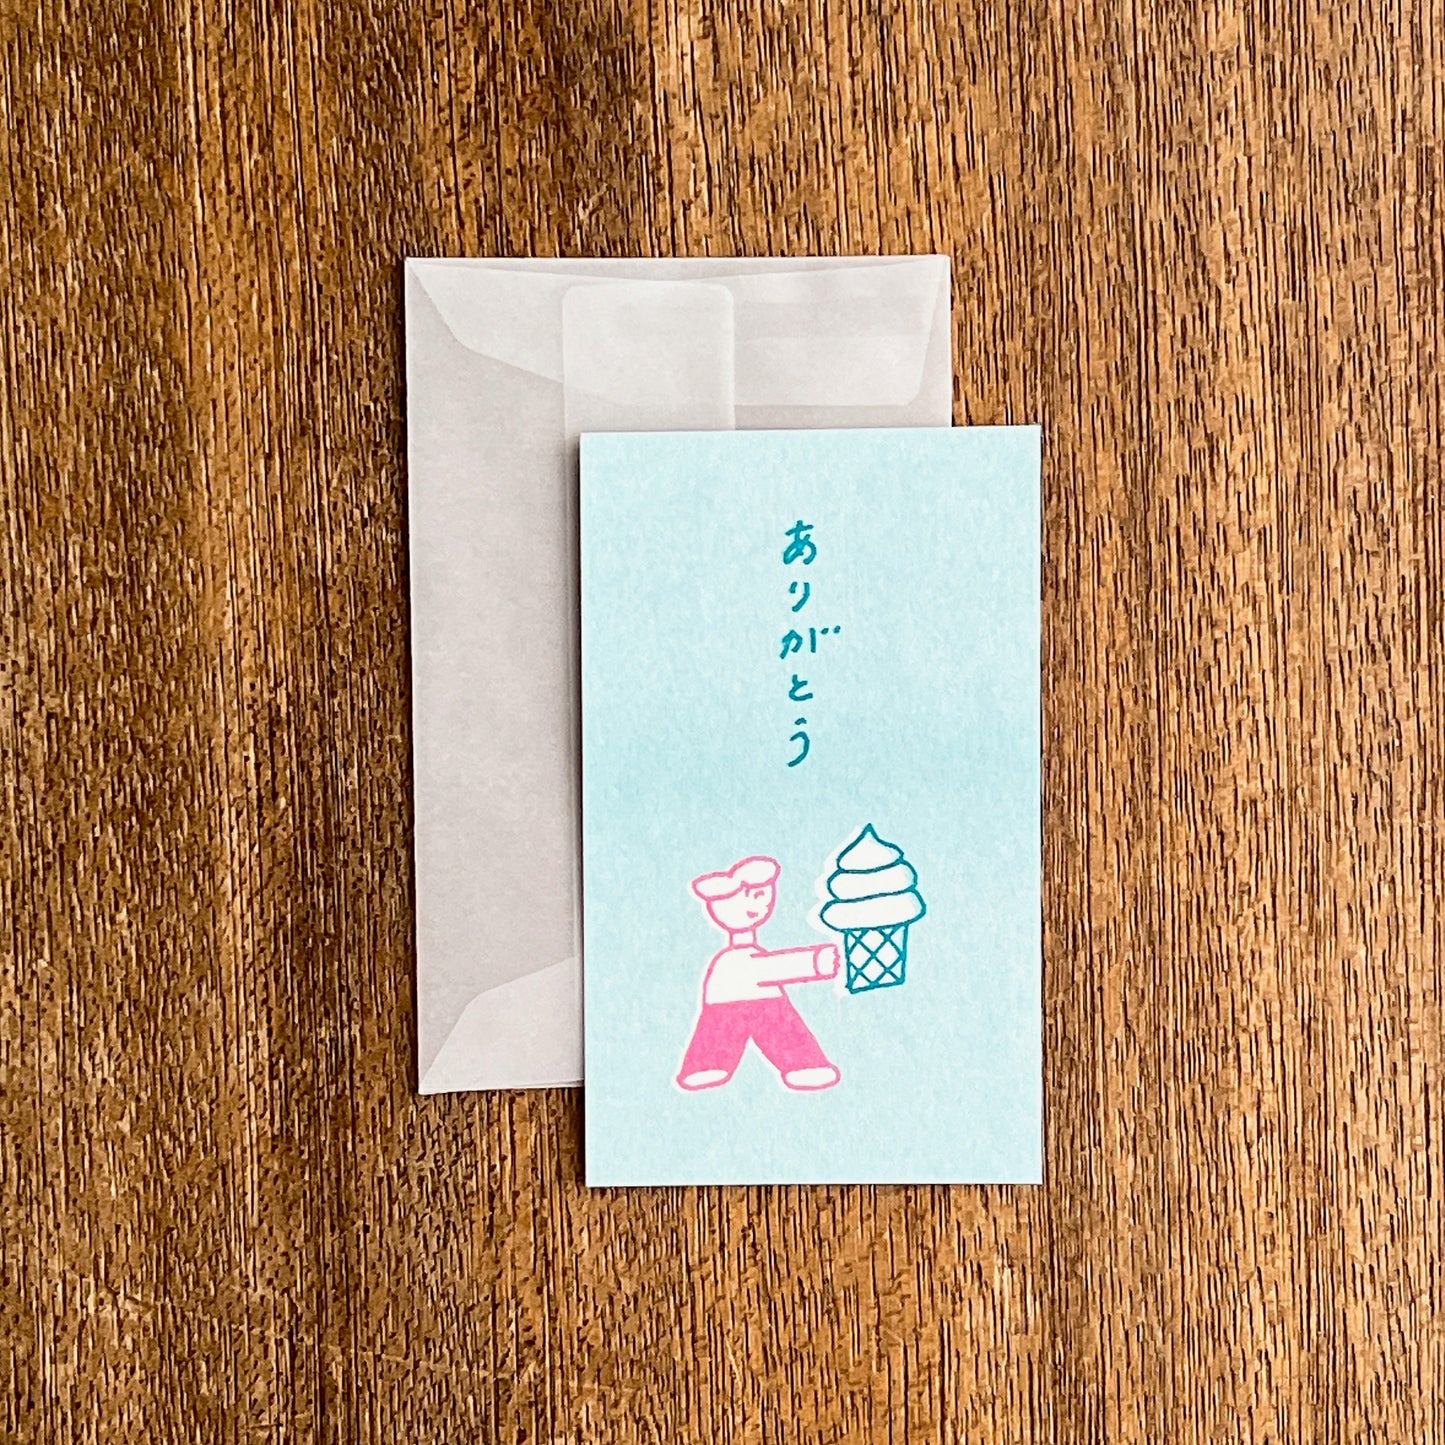 Tadashi Nishiwaki × mizushima Small Card Arigato (Thank you)